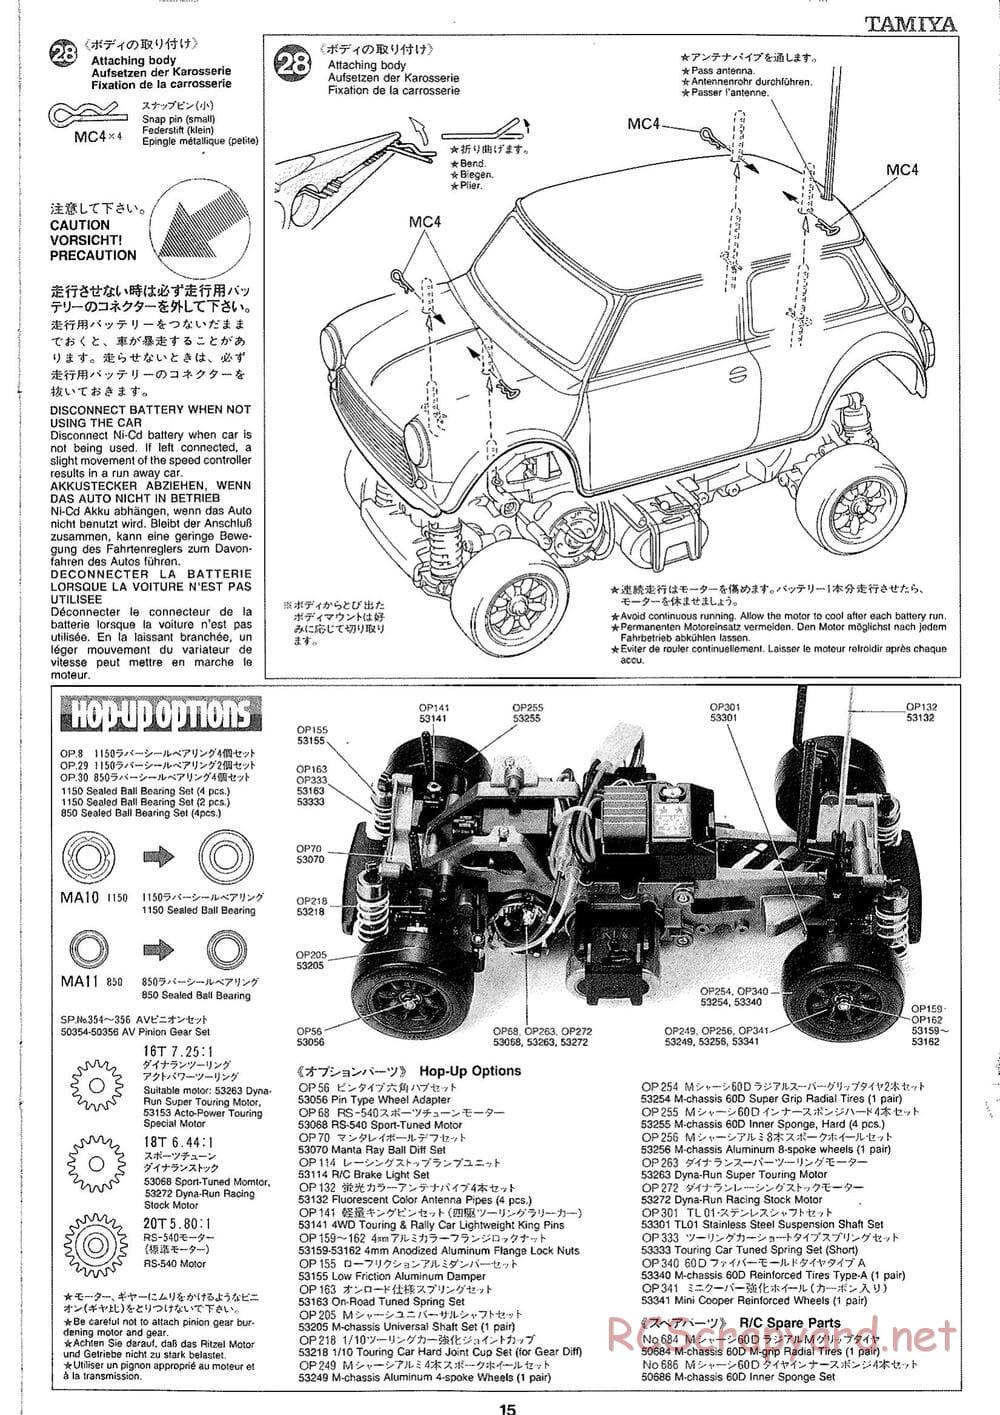 Tamiya - Rover Mini Cooper Racing - M03 Chassis - Manual - Page 15